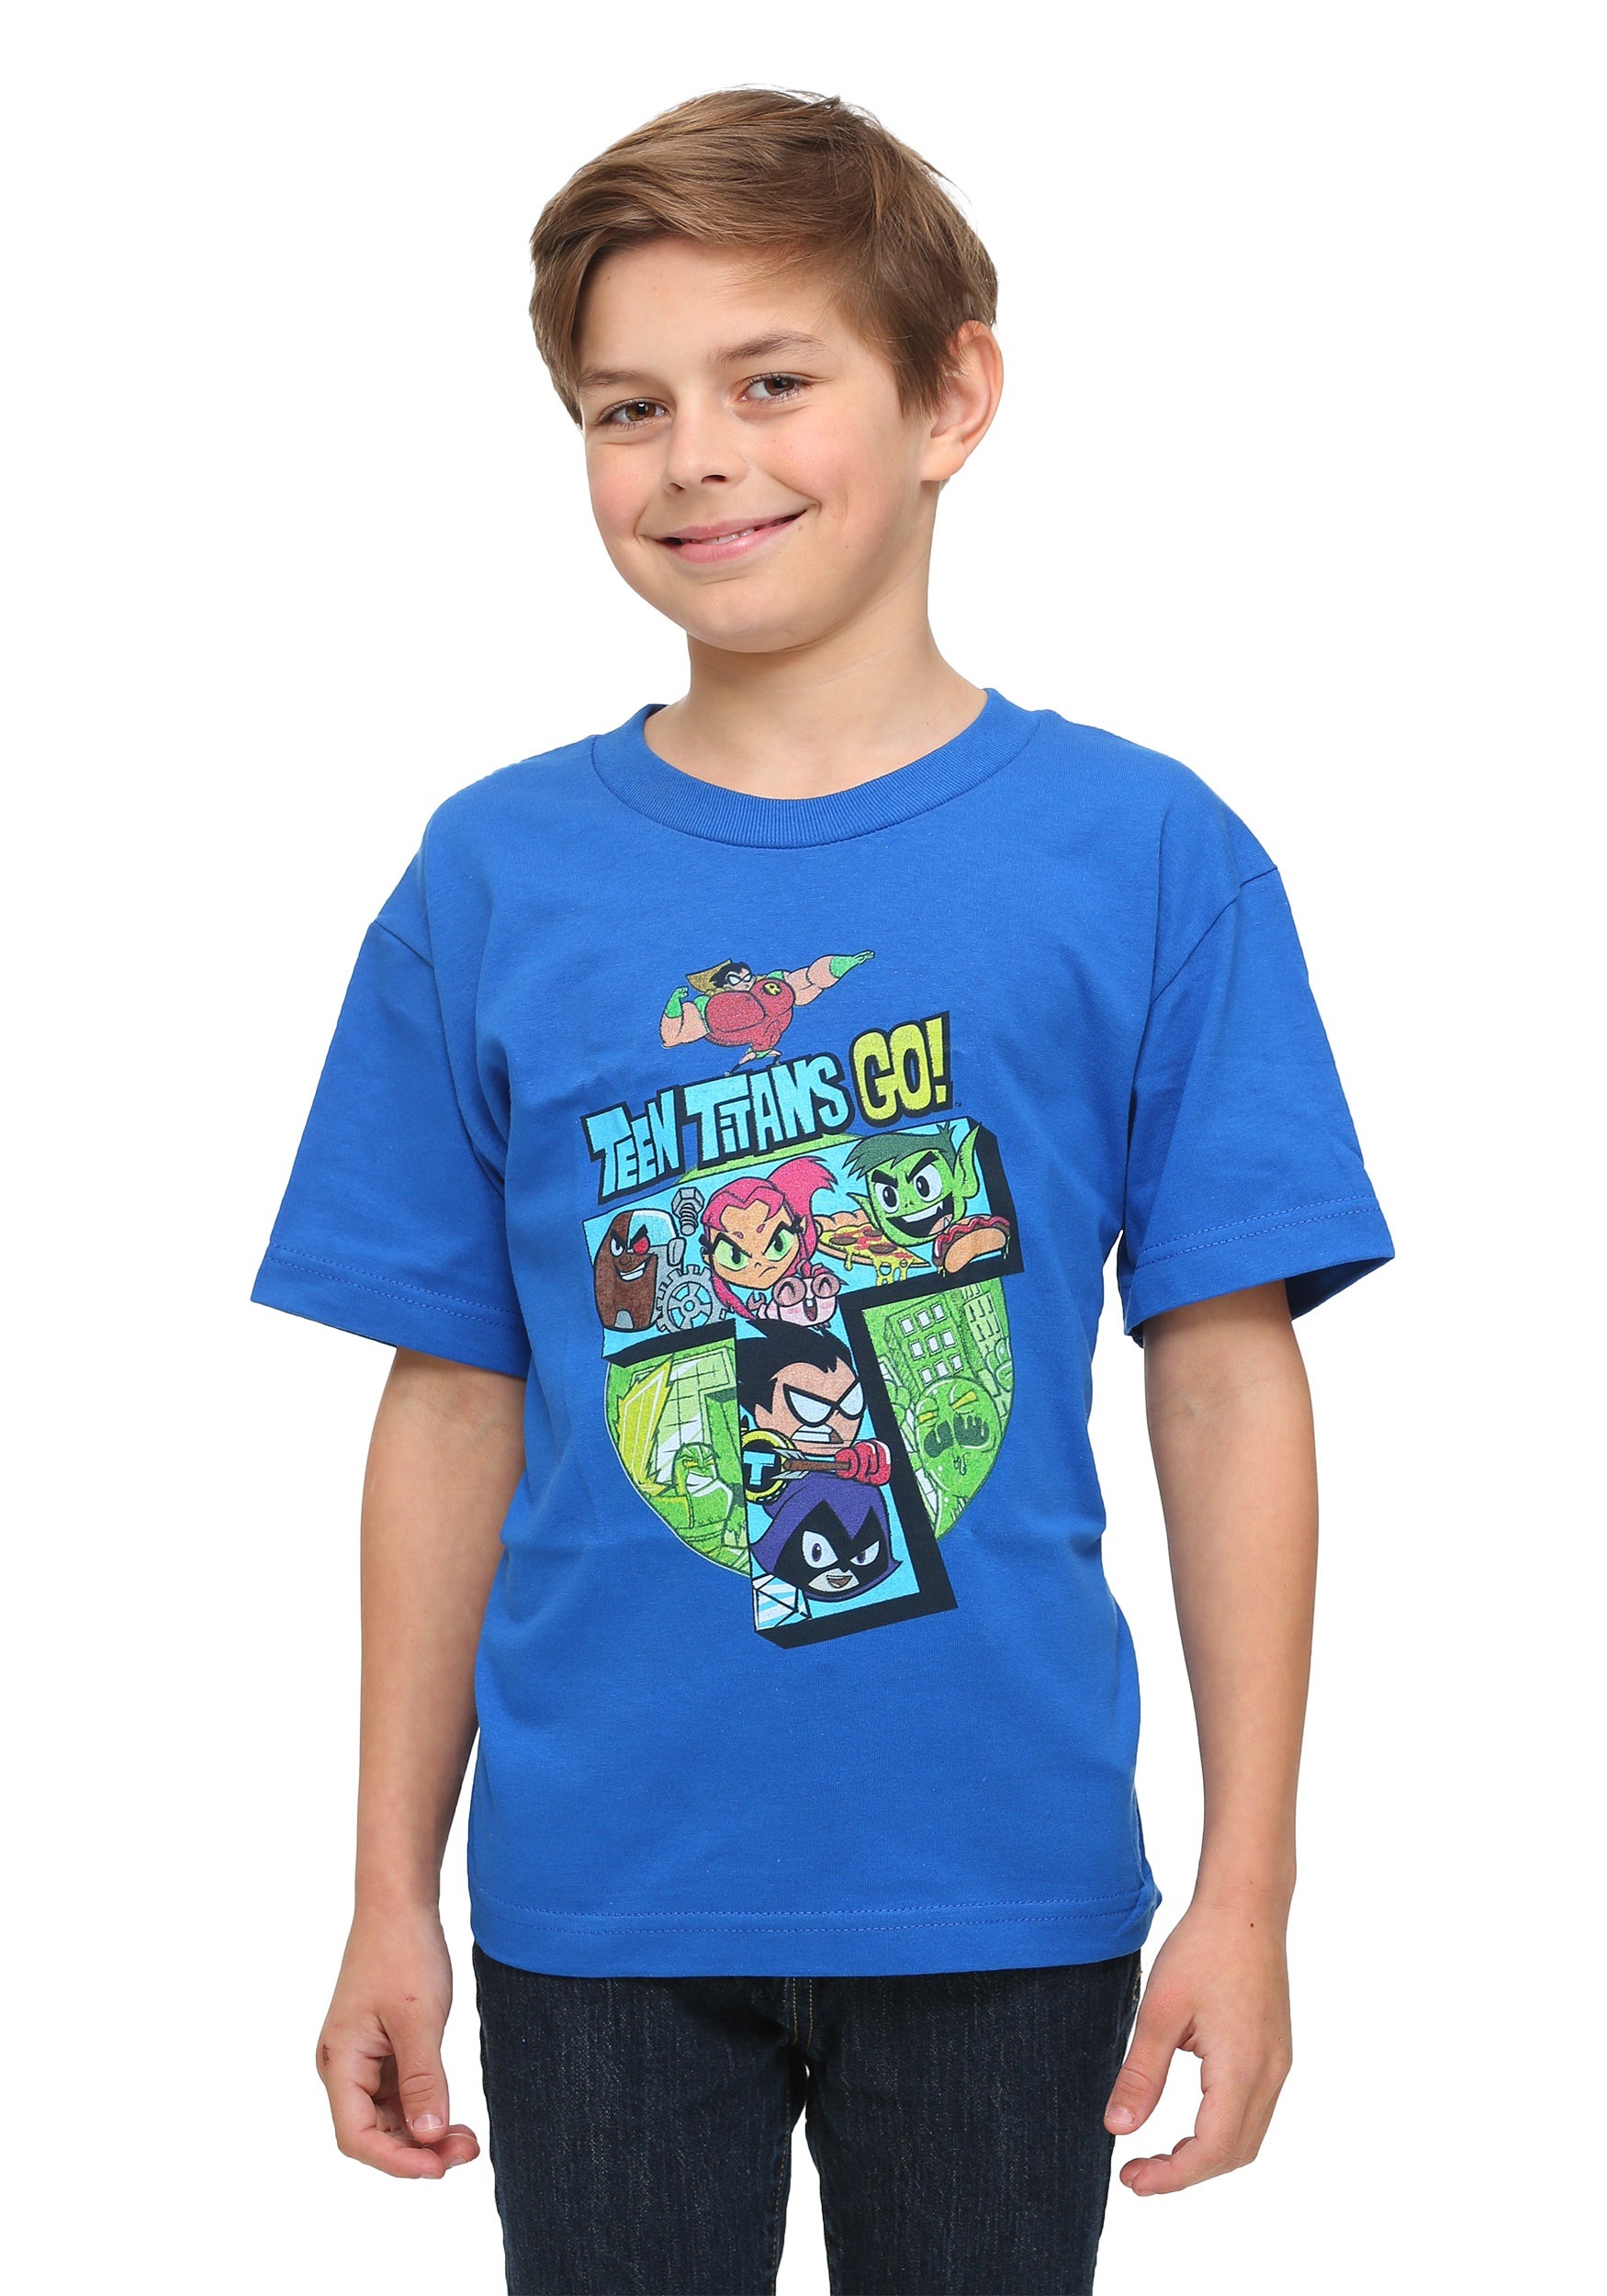 Teen Titans Go Blue Youth TShirt